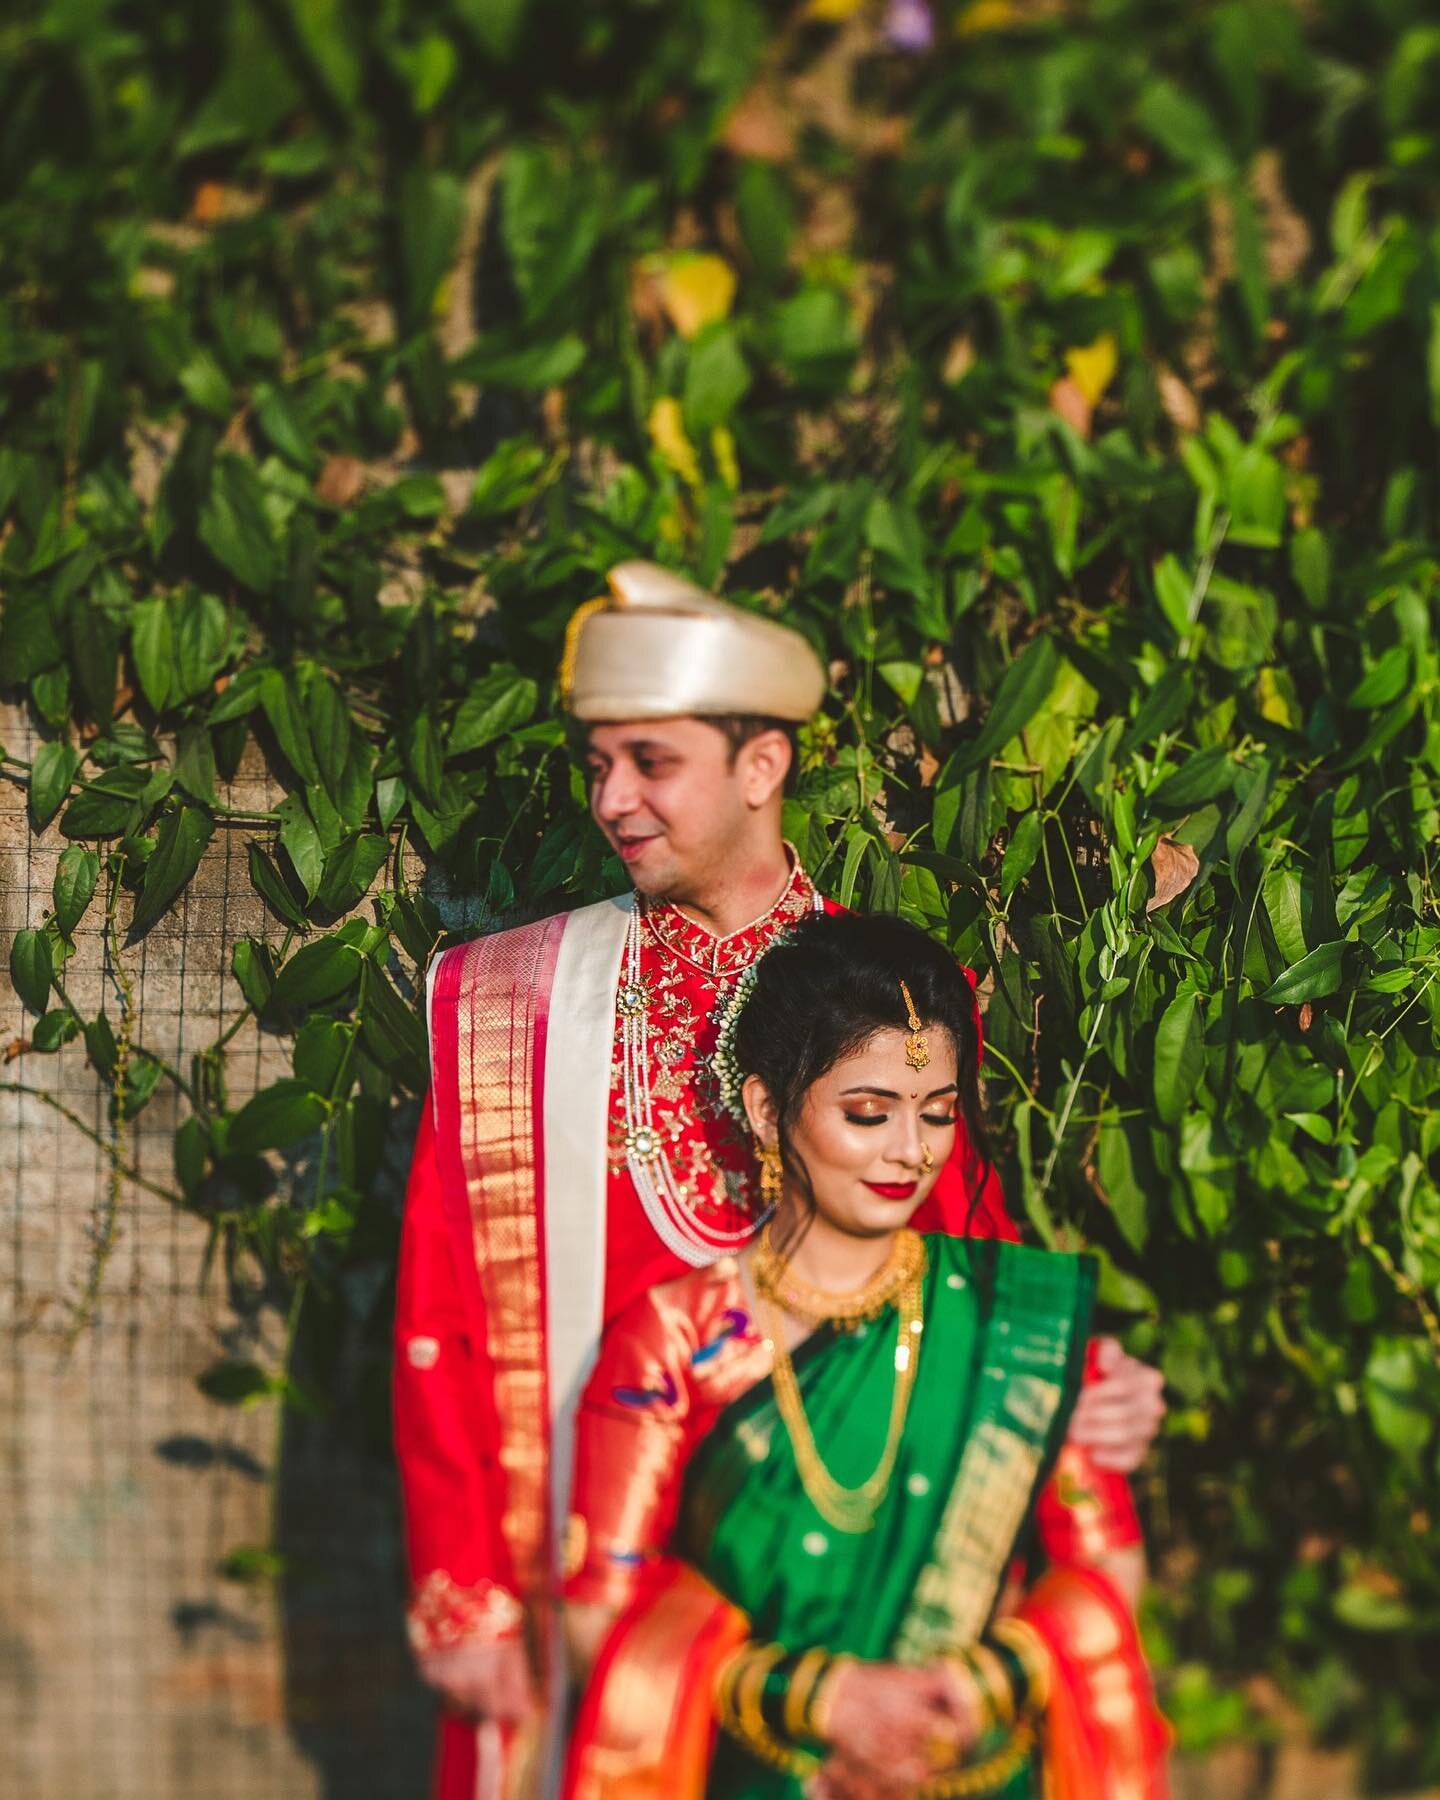 Siddhi &amp; Aniruddh, Pune
A beautiful marathi wedding in Pune
Swipe left for more photos.

Shot by : @theweddingtoast.in 
Venue : @marigoldbanquets_pune 
Shot with : @nikonindiaofficial @nikonasia 

#theweddingtoast #IAmNikon #weddinggoals  #southa